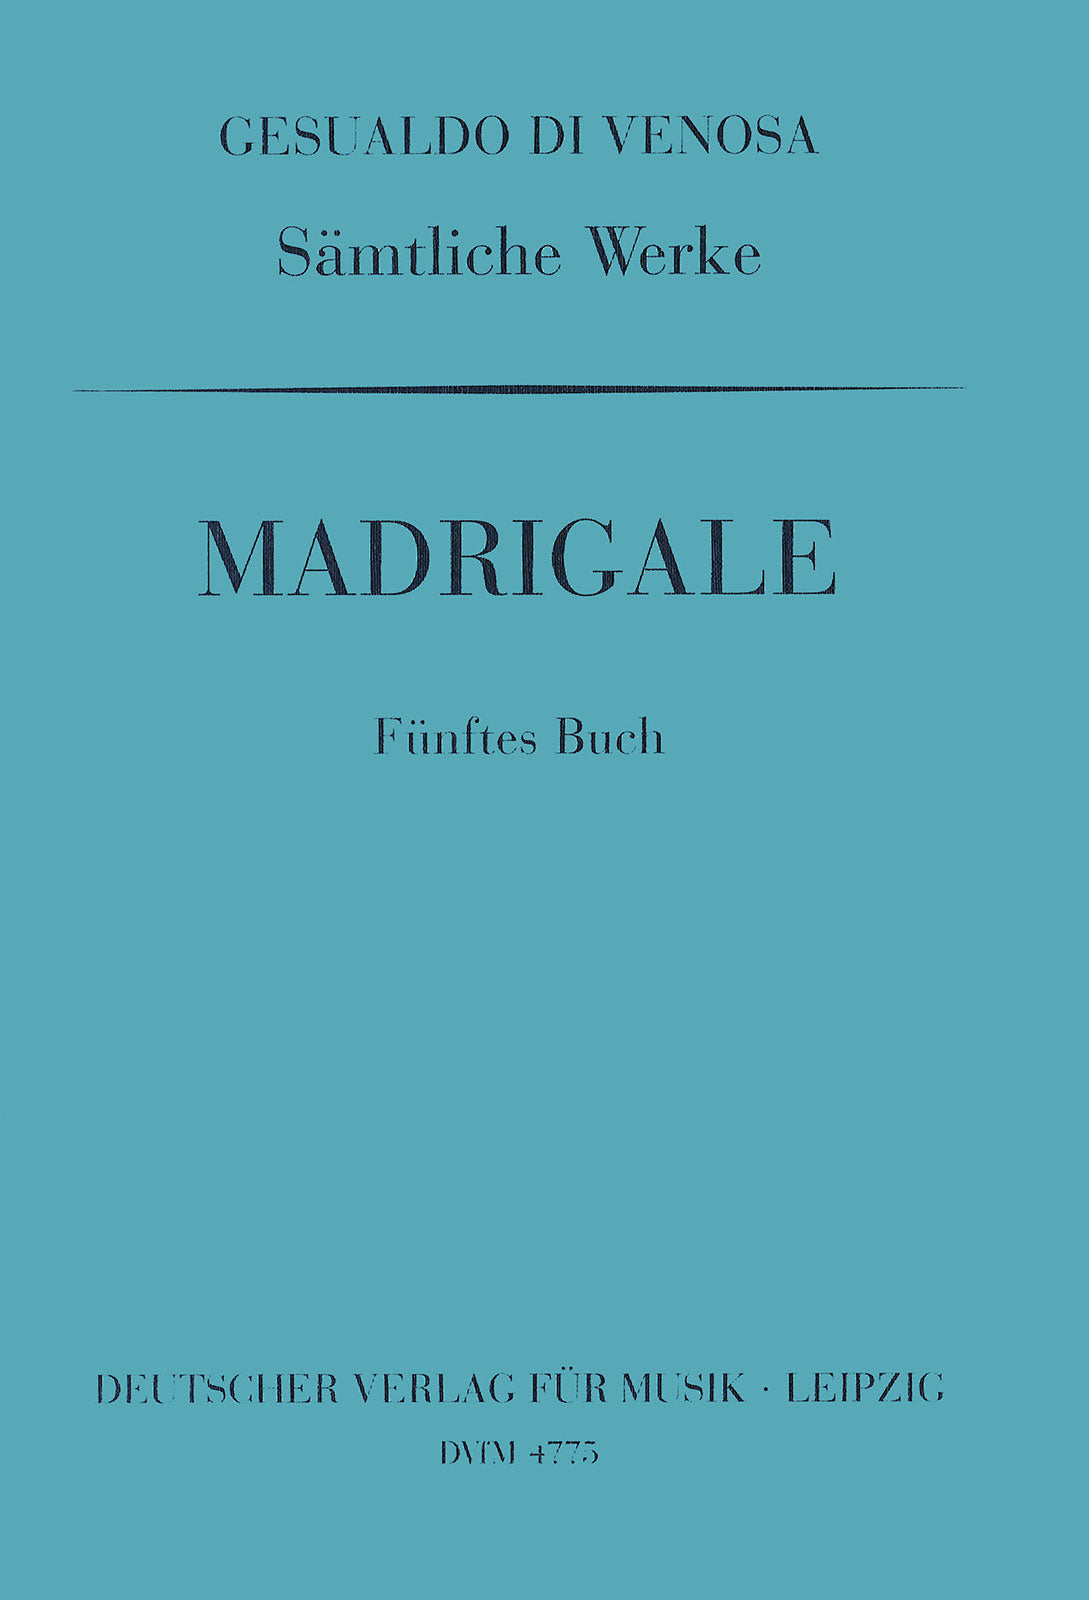 Gesualdo: Madrigals - Book 5 (Op. 13)